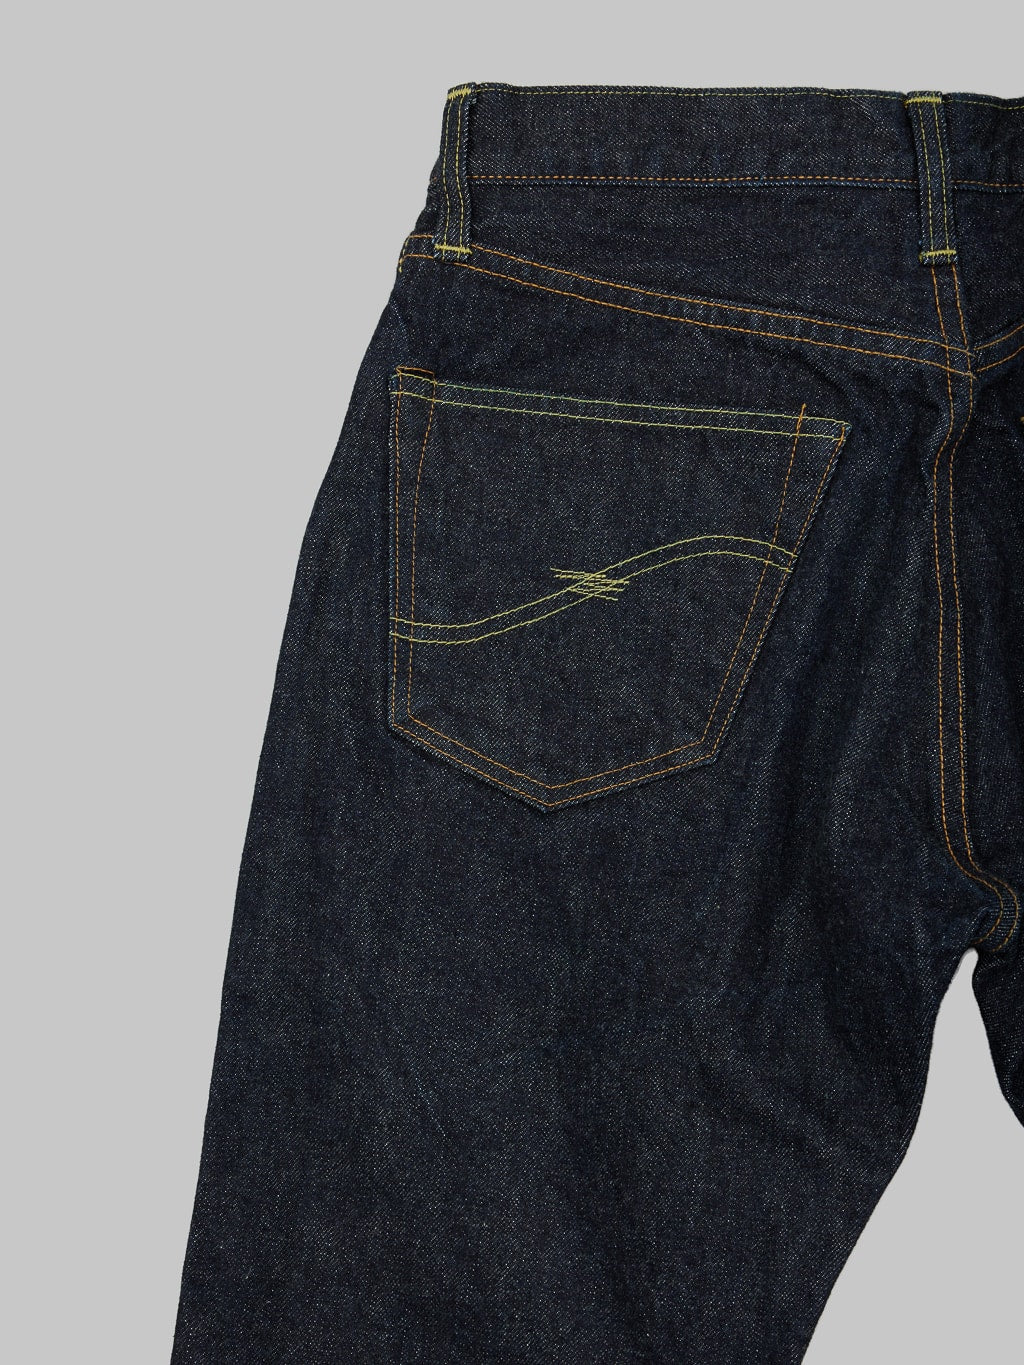 Fob factory slim straight denim jeans back pocket stitching